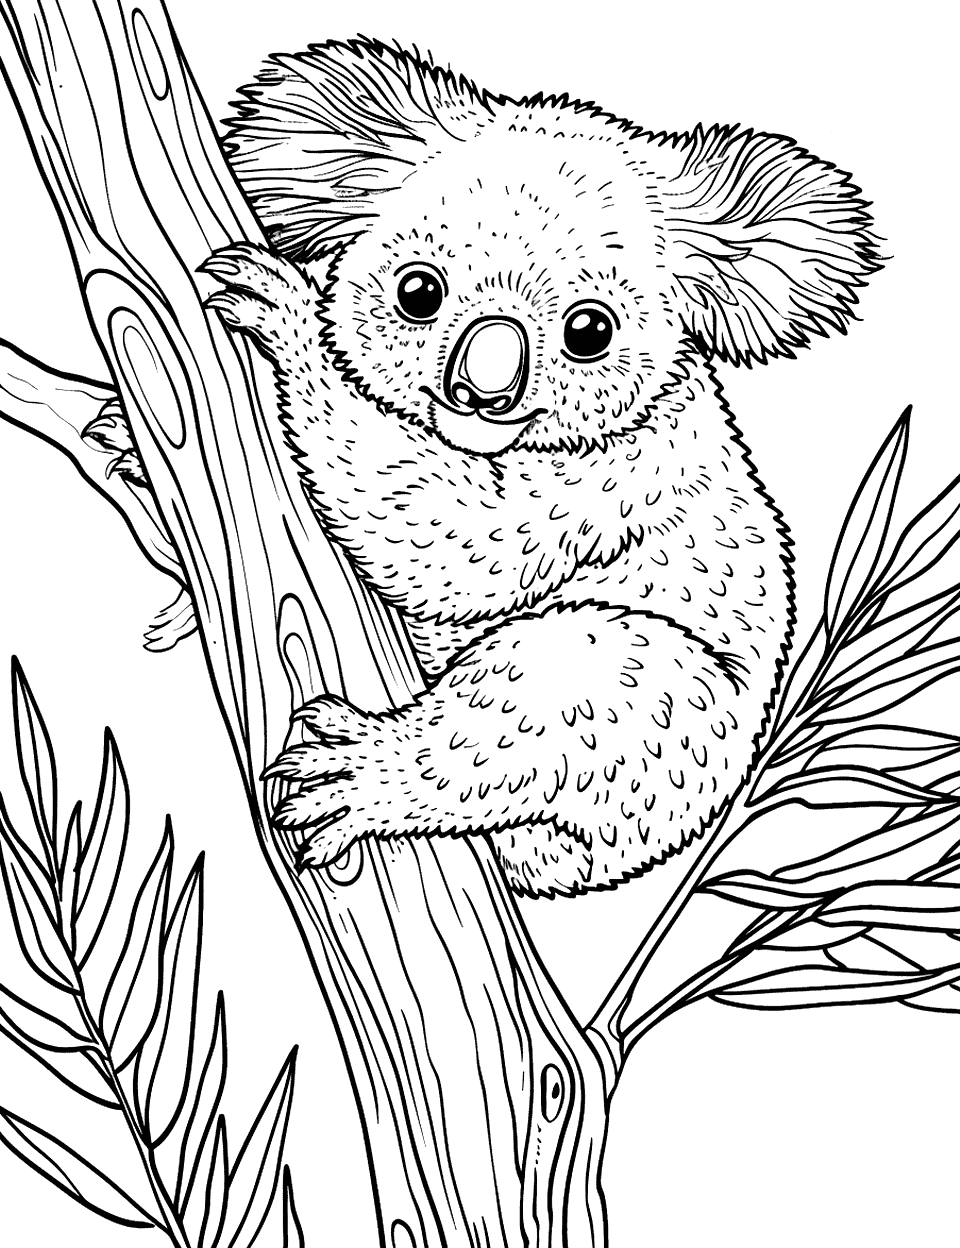 Koala Climbing Adventure Coloring Page - A koala energetically climbing up a tall eucalyptus tree.